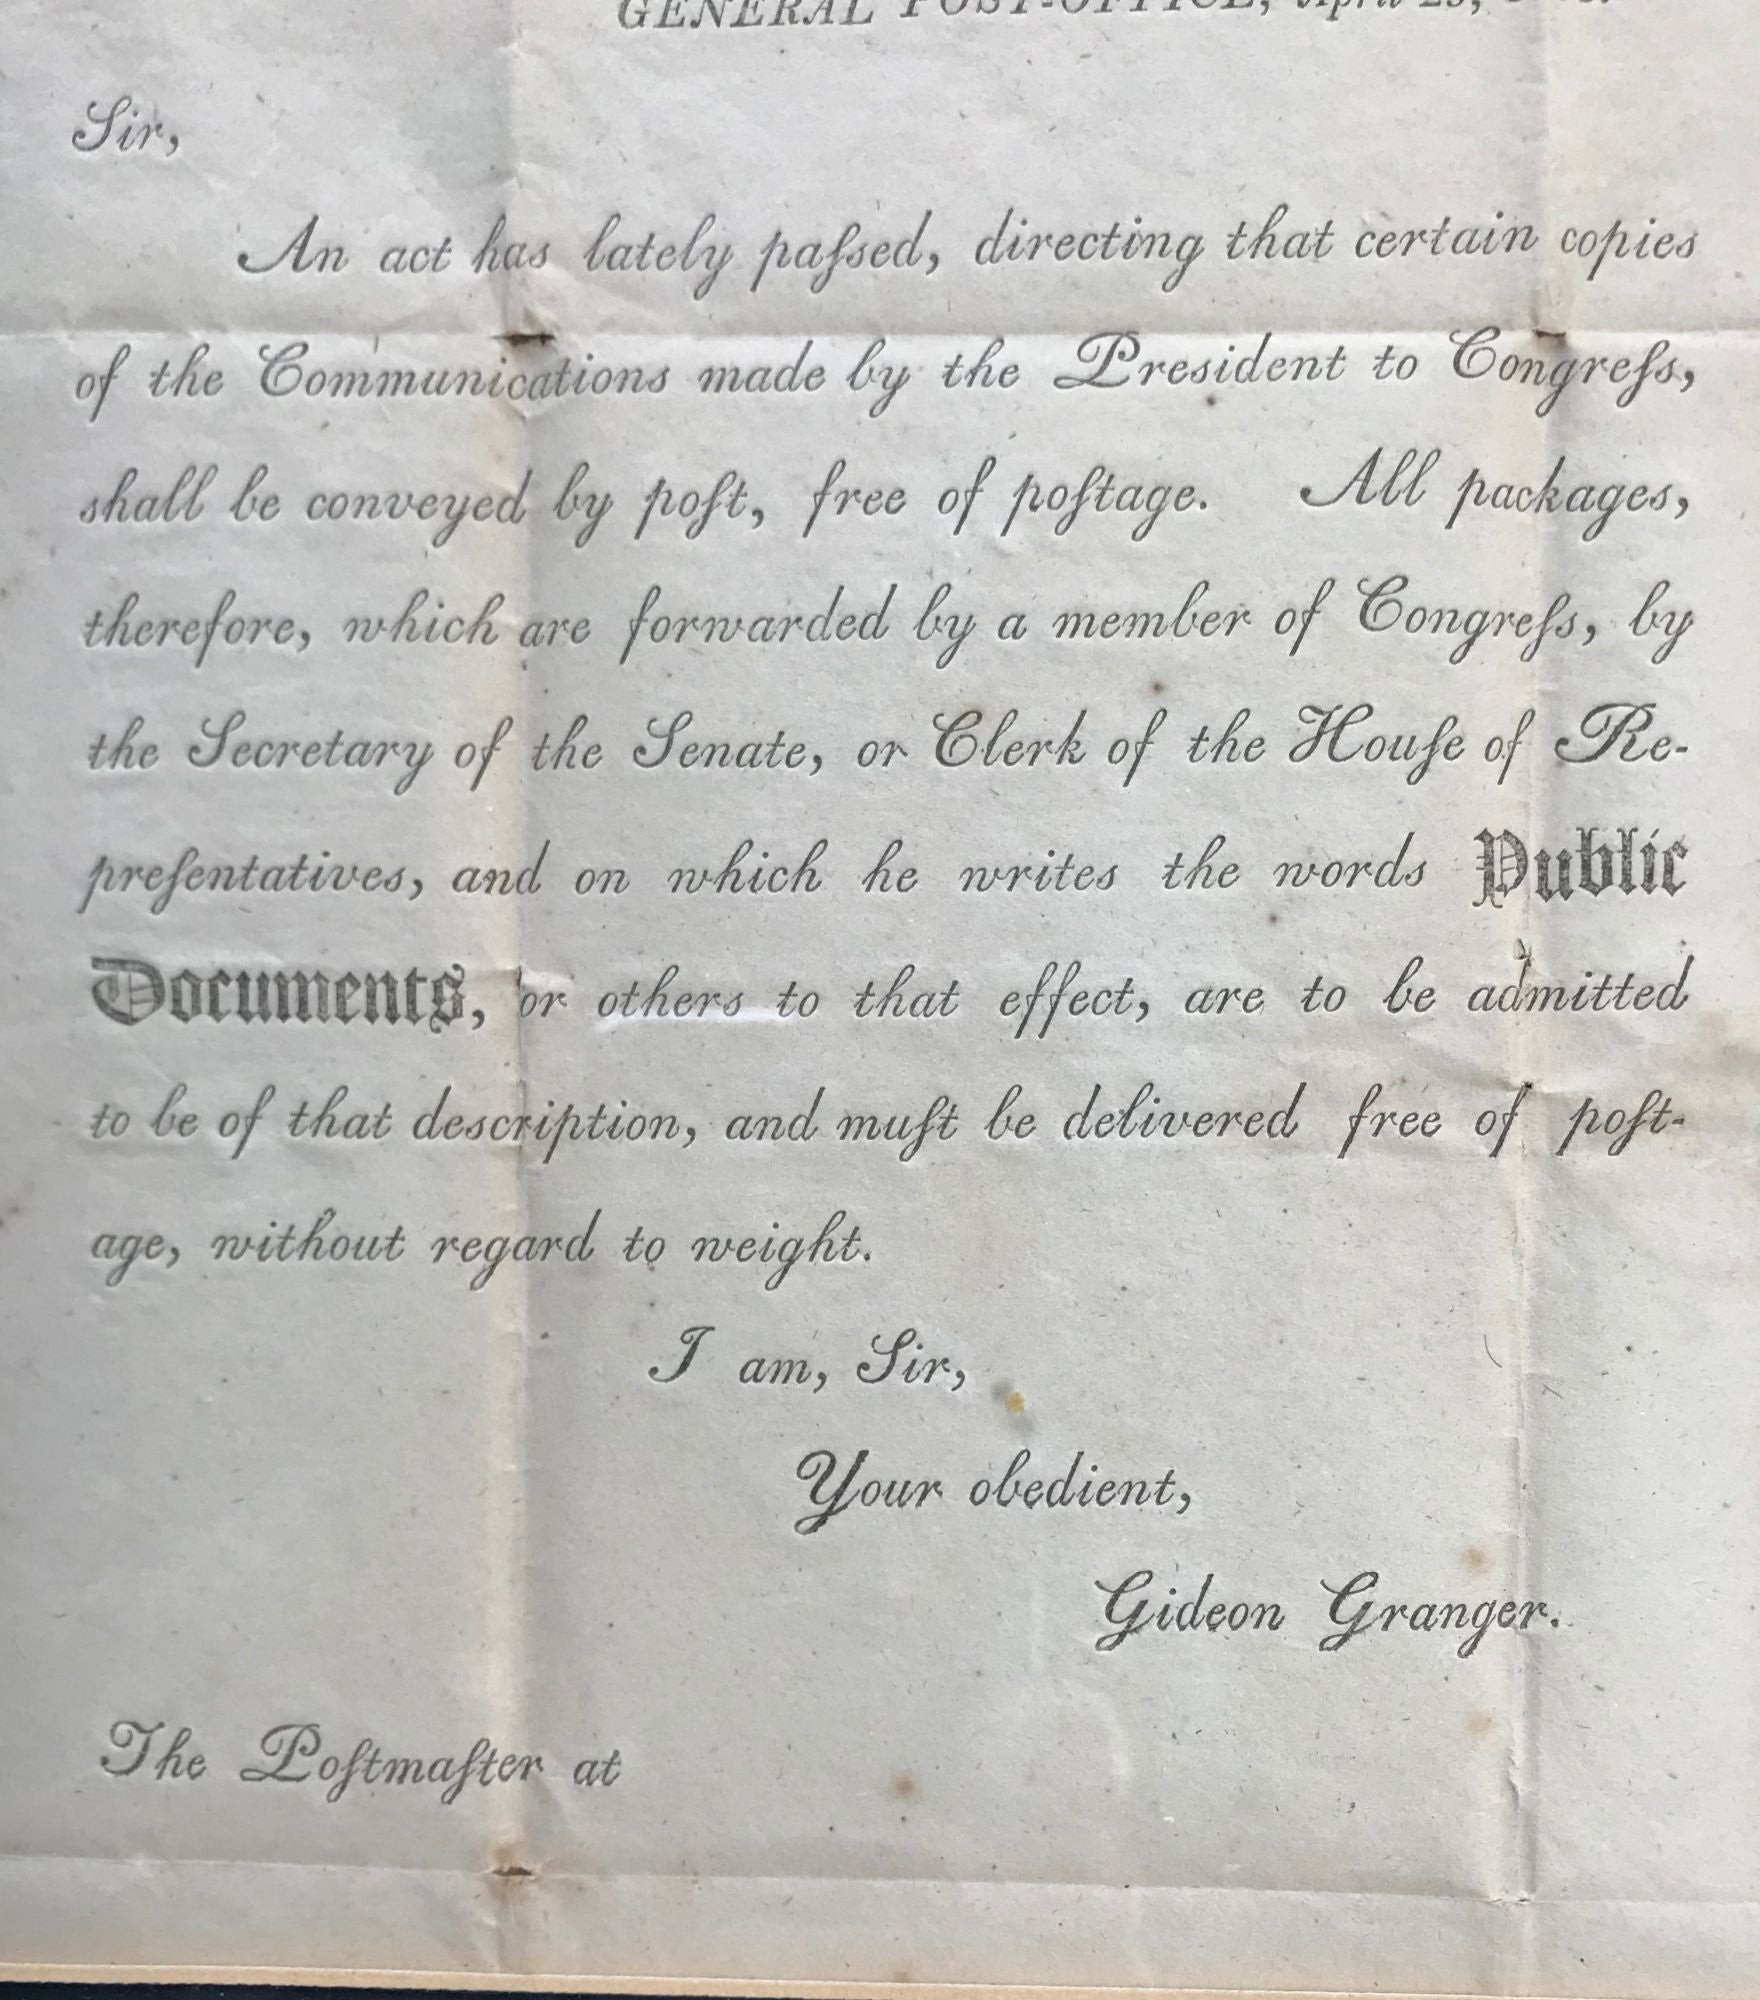 GENERAL POST-OFFICE, April 25, 1808 | Gideon GRANGER